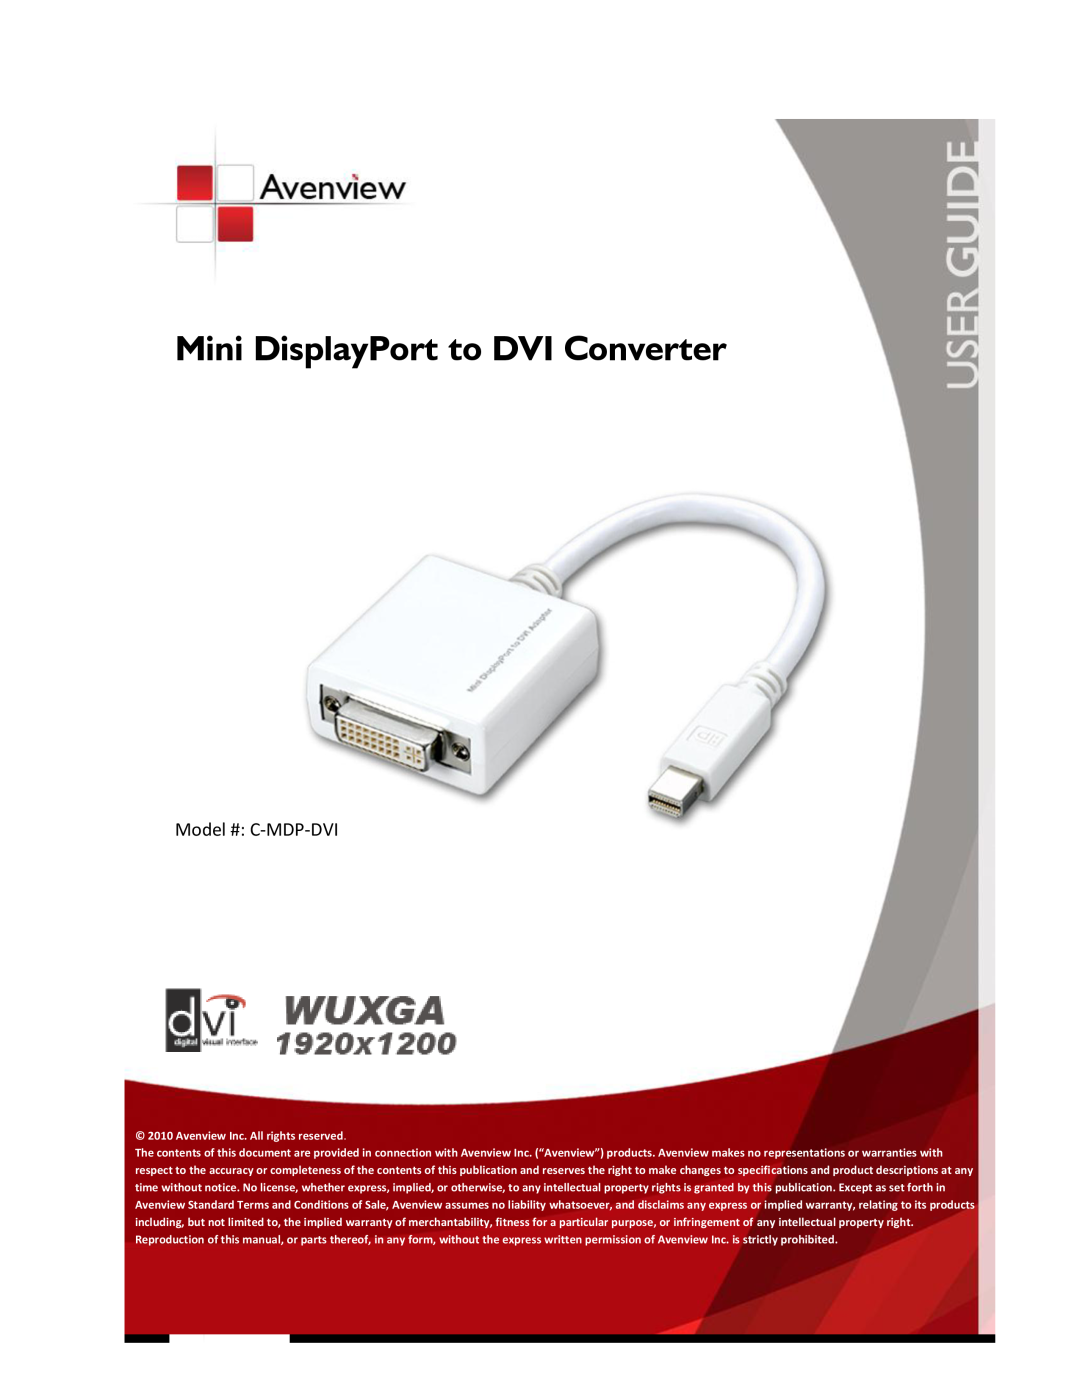 Avenview specifications Model # C-MDP-DVI, Mini DisplayPort to DVI Converter 